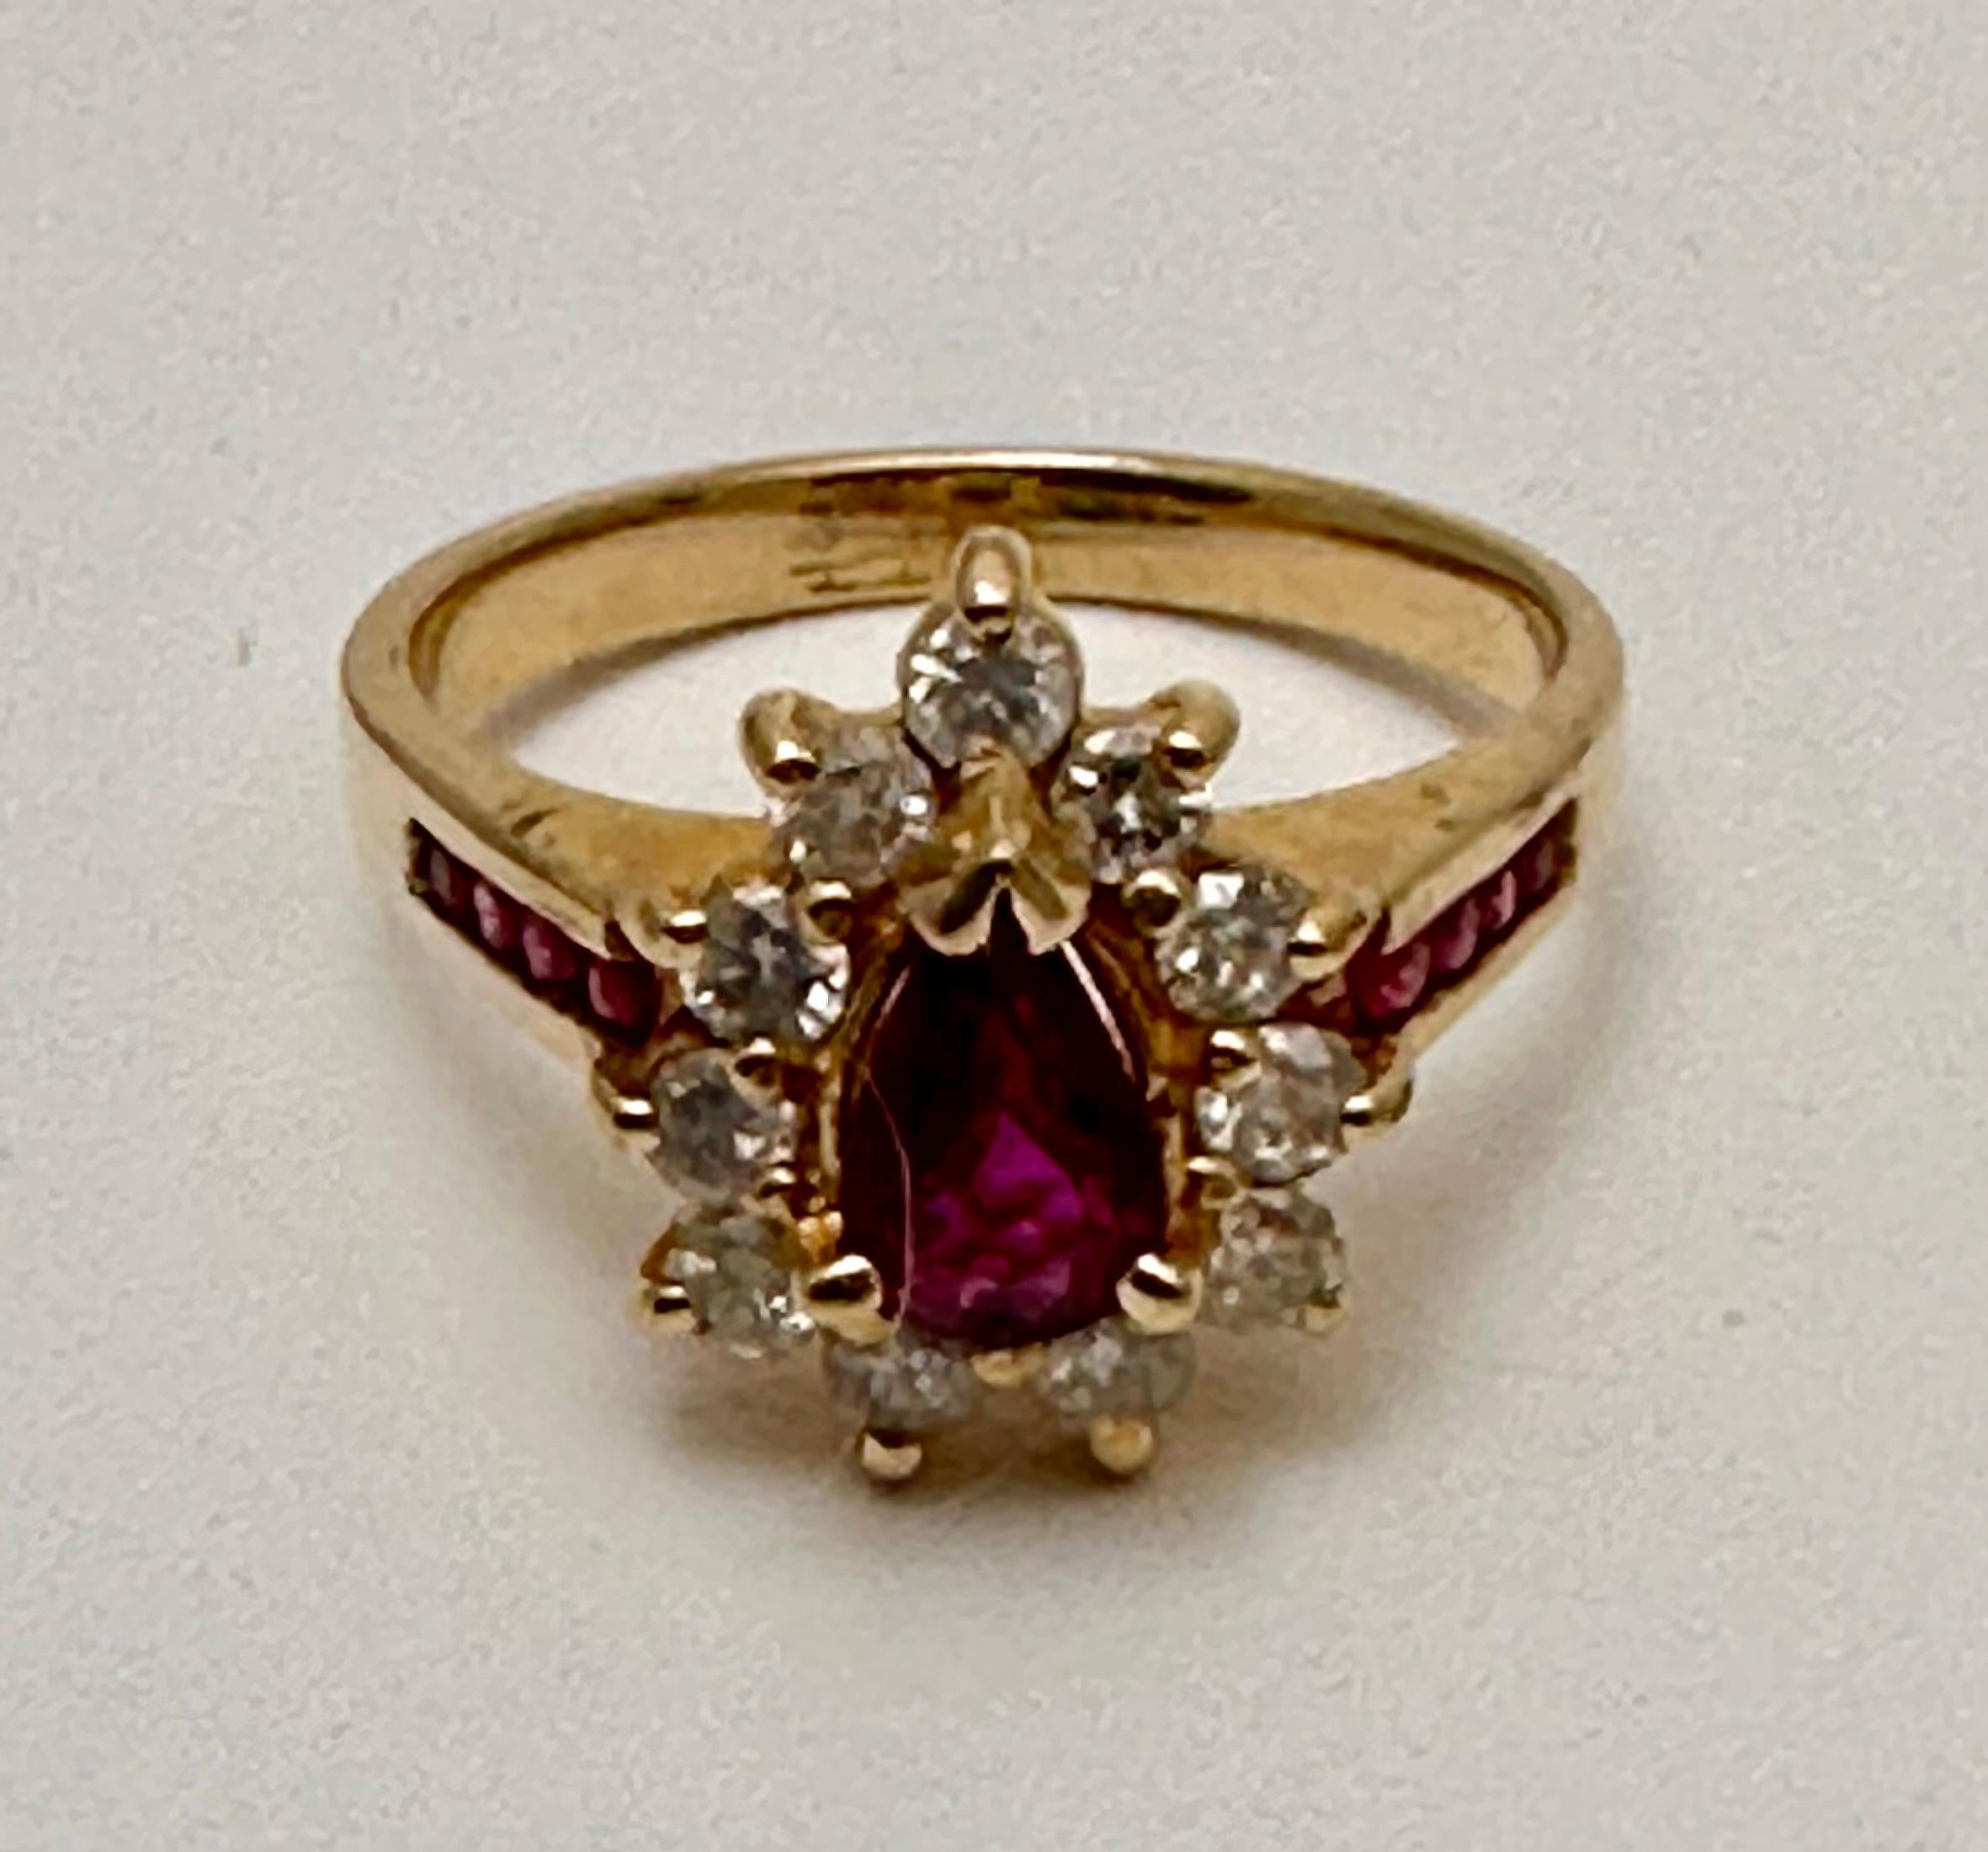 14k Yellow Gold 5mm x 7mm Pear Shape Ruby w/Surrounding Diamonds Ring Sz 6 1/2 For Sale 4